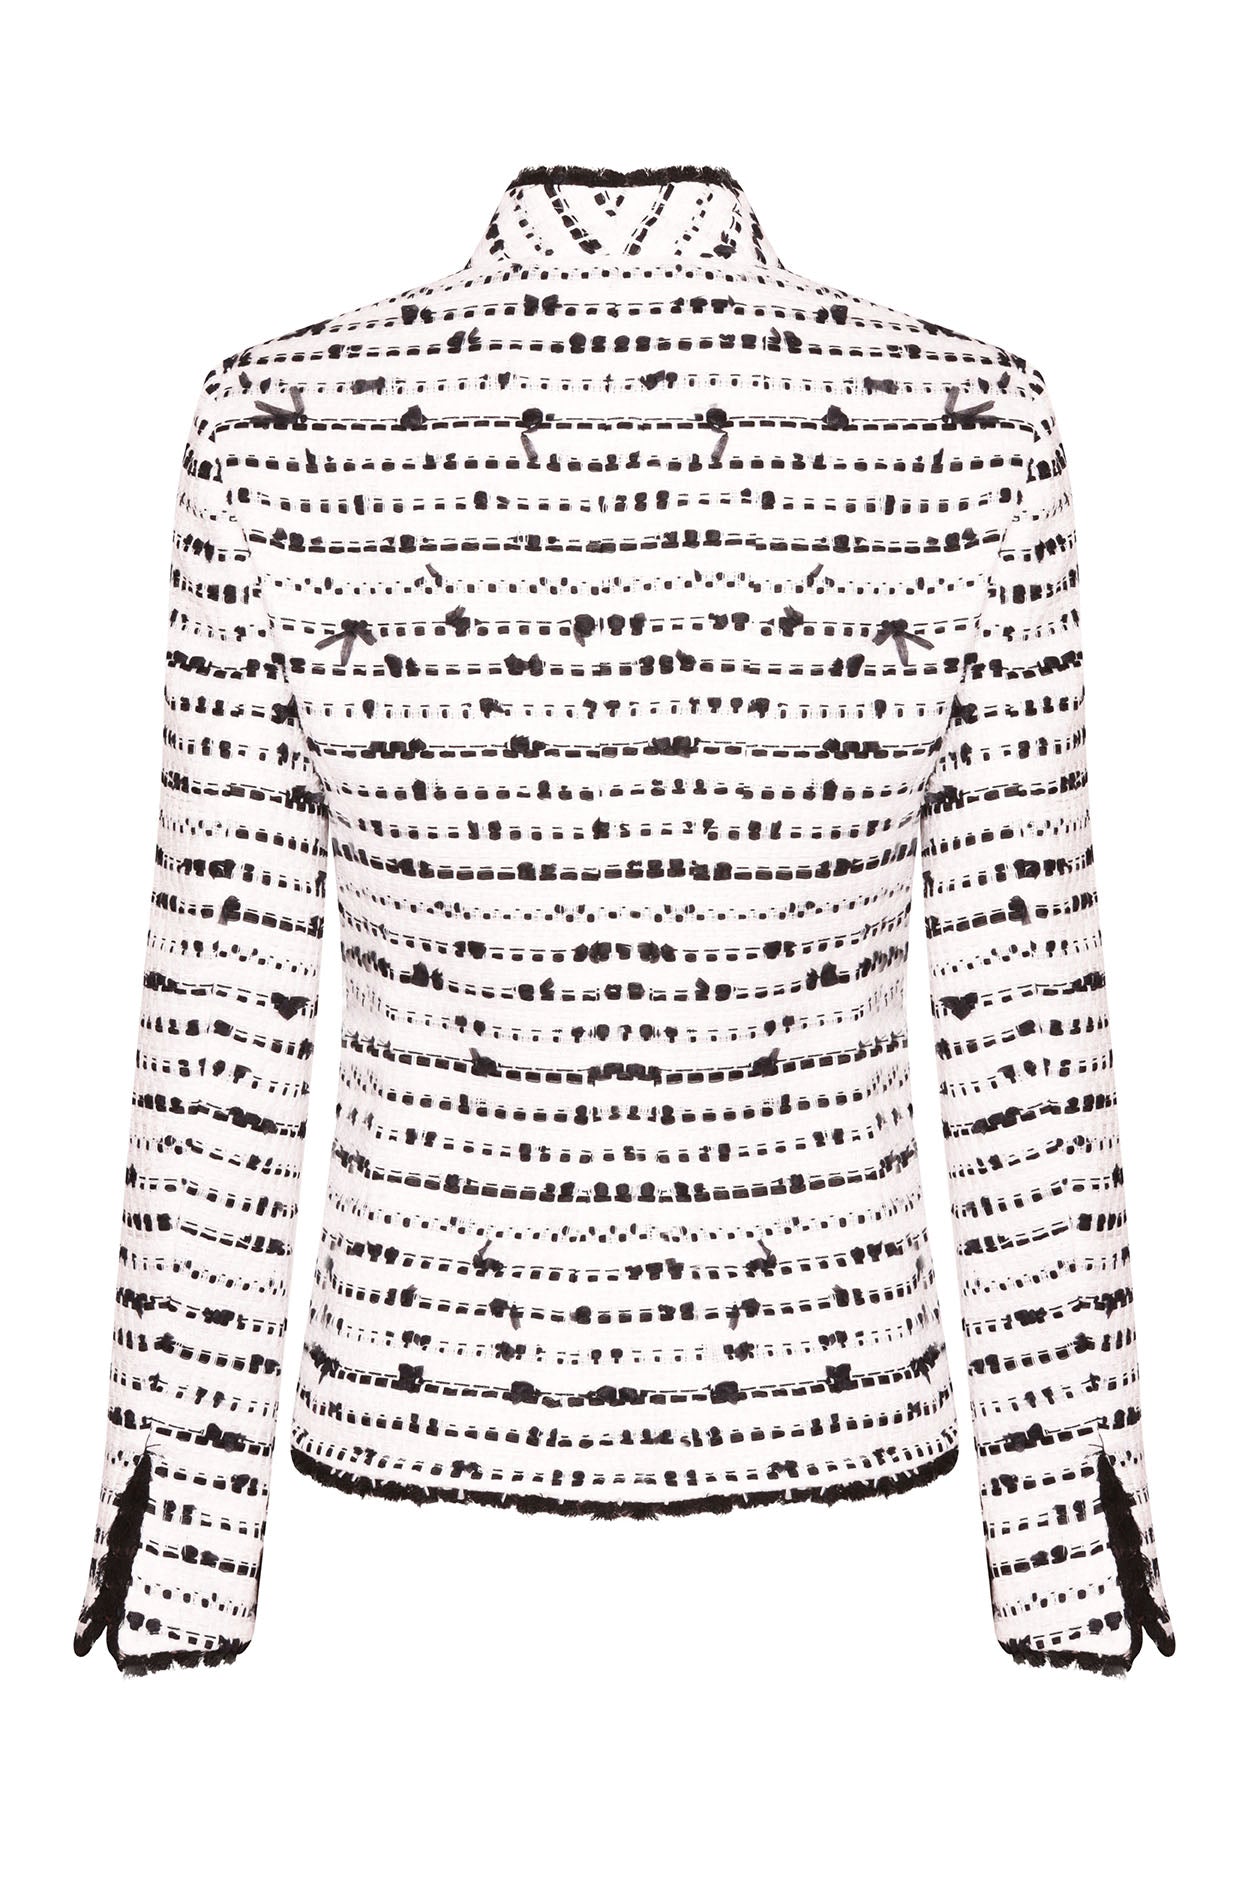 Tweed Jacket in Black and White and Black Picot Braid Edging - Diana